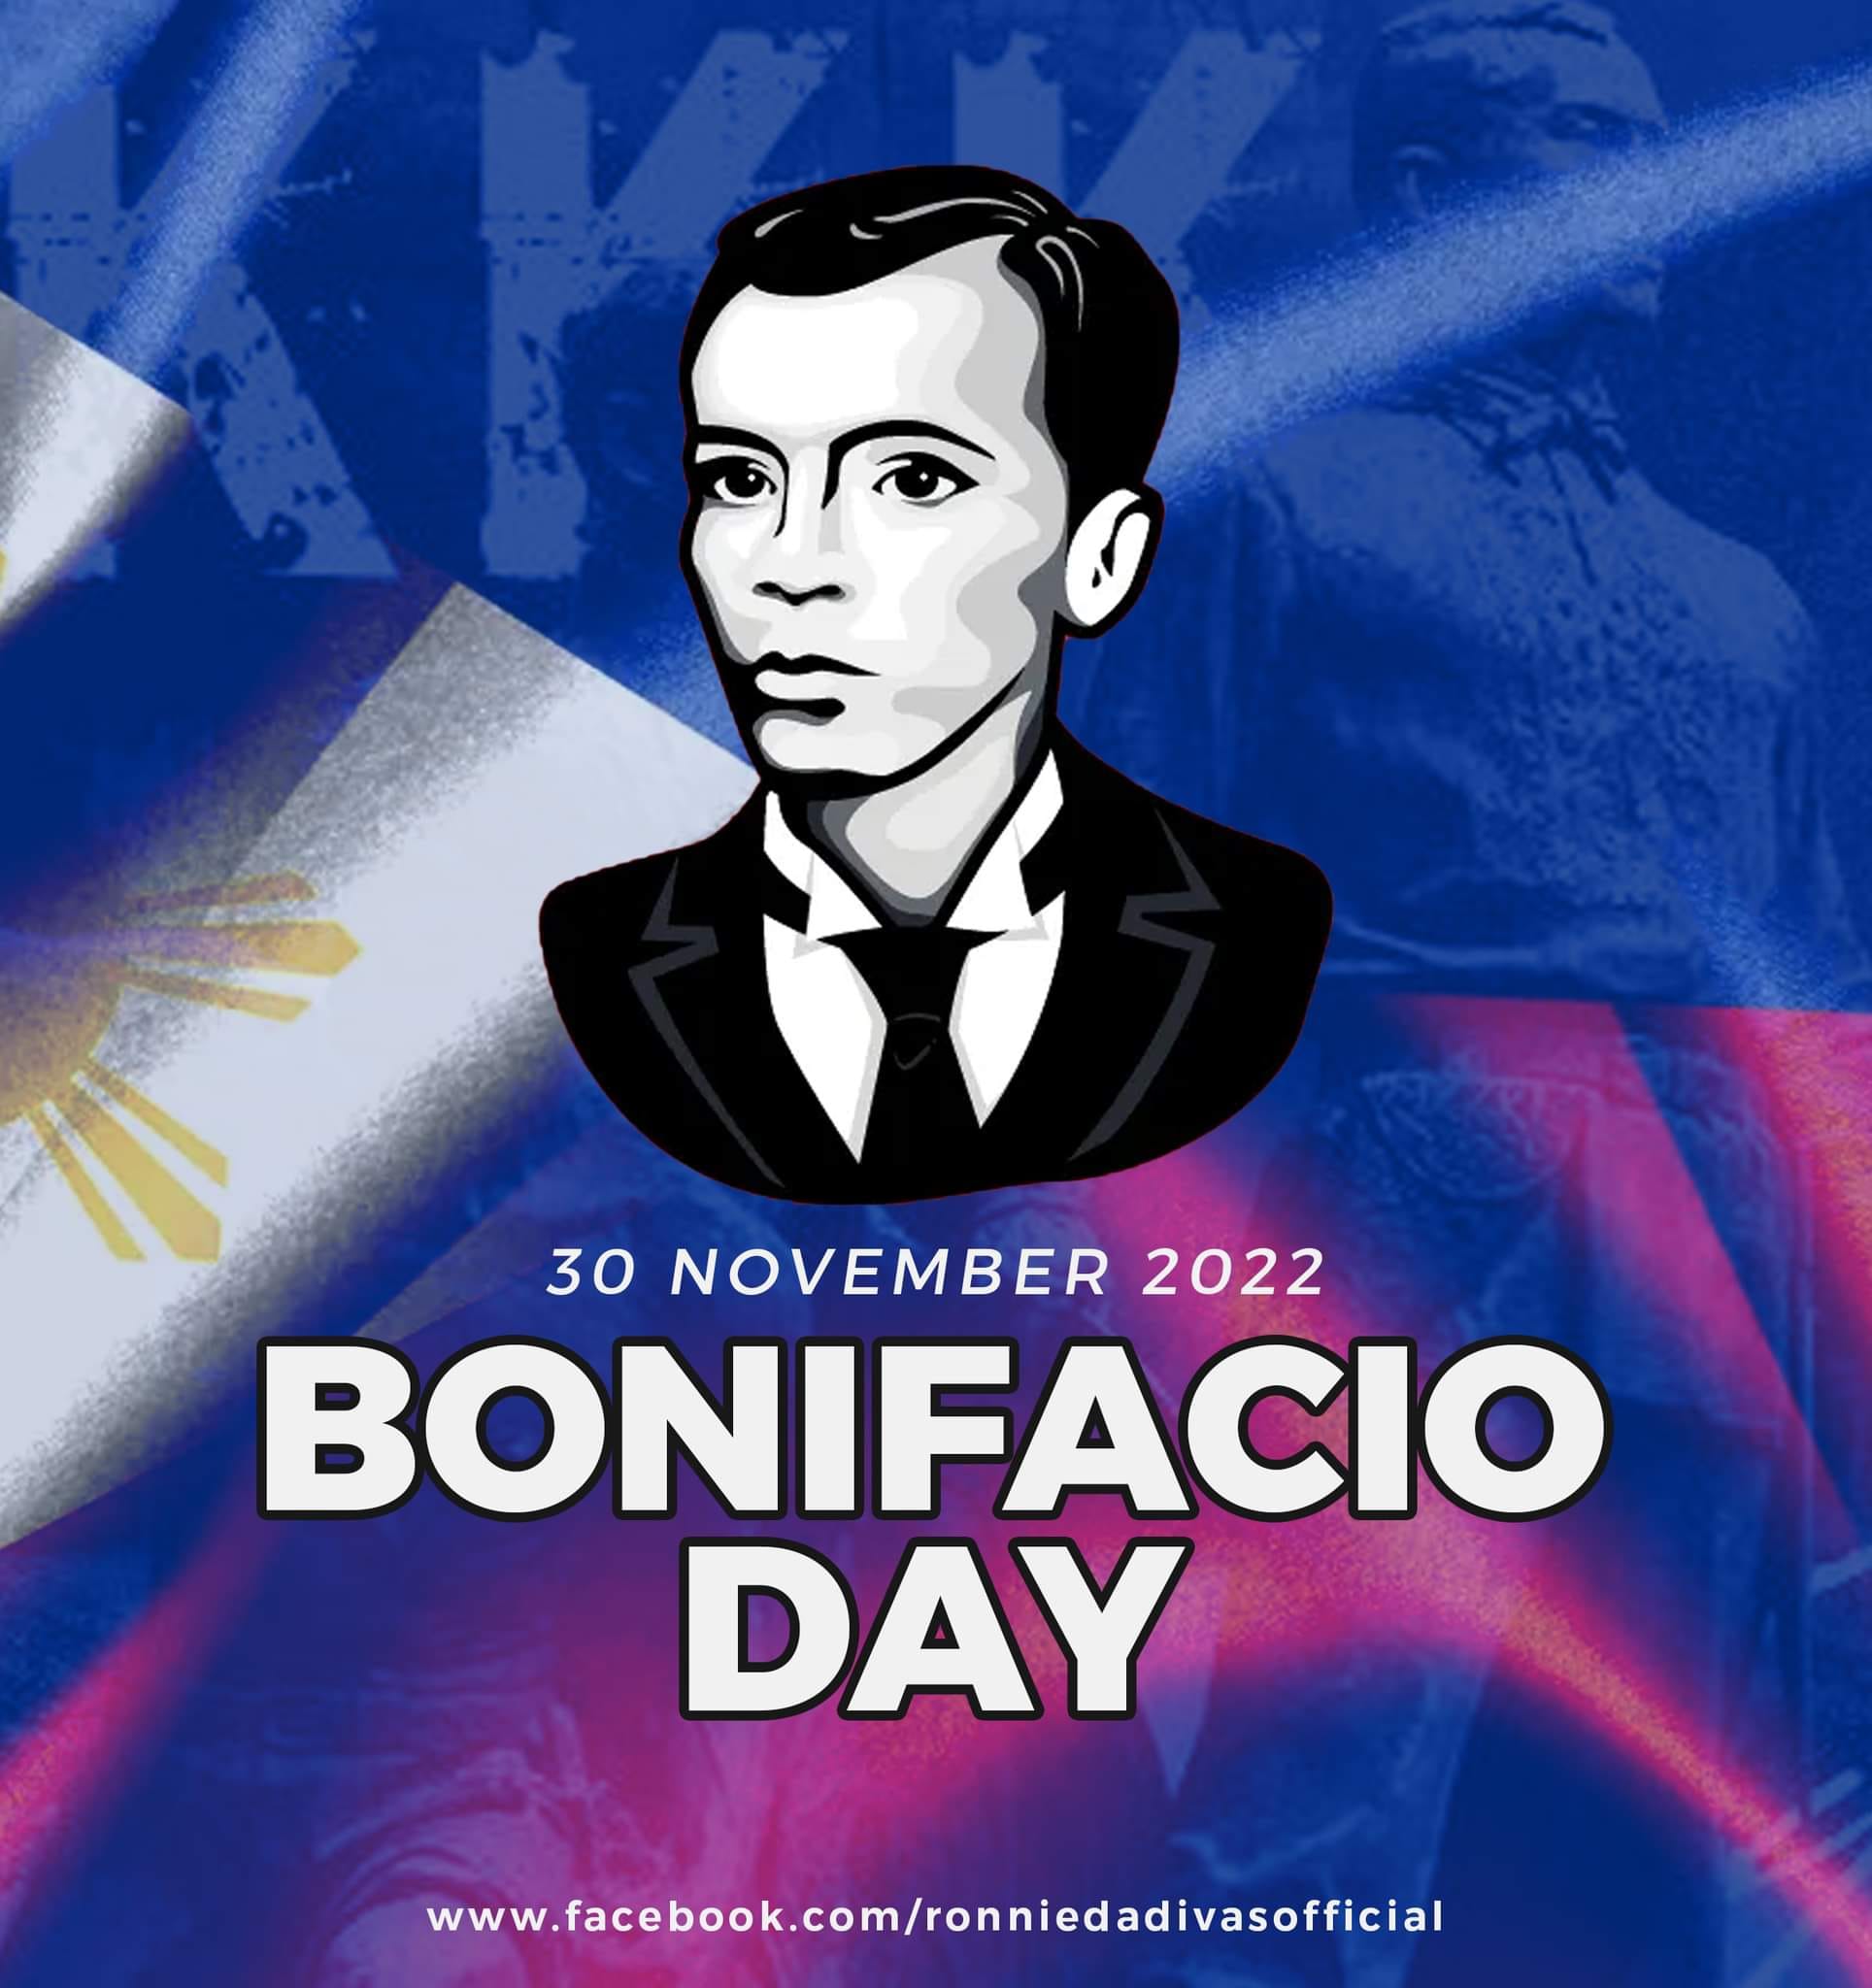 NOVEMBER 30 is BONIFACIO DAY Bigger, Brighter, Better Roxas City